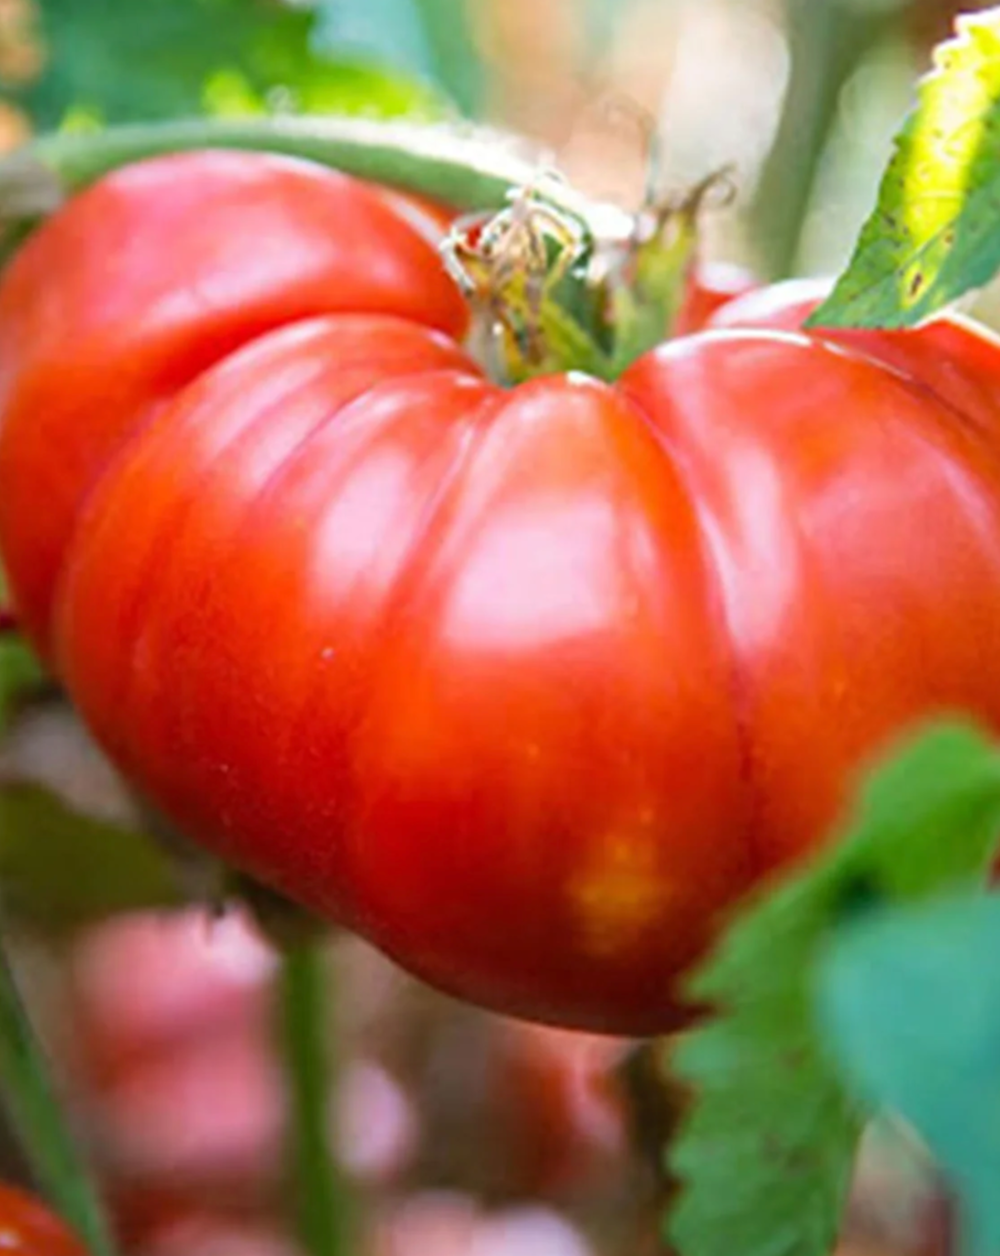 Tomato &#39;Marmande&#39; Seeds